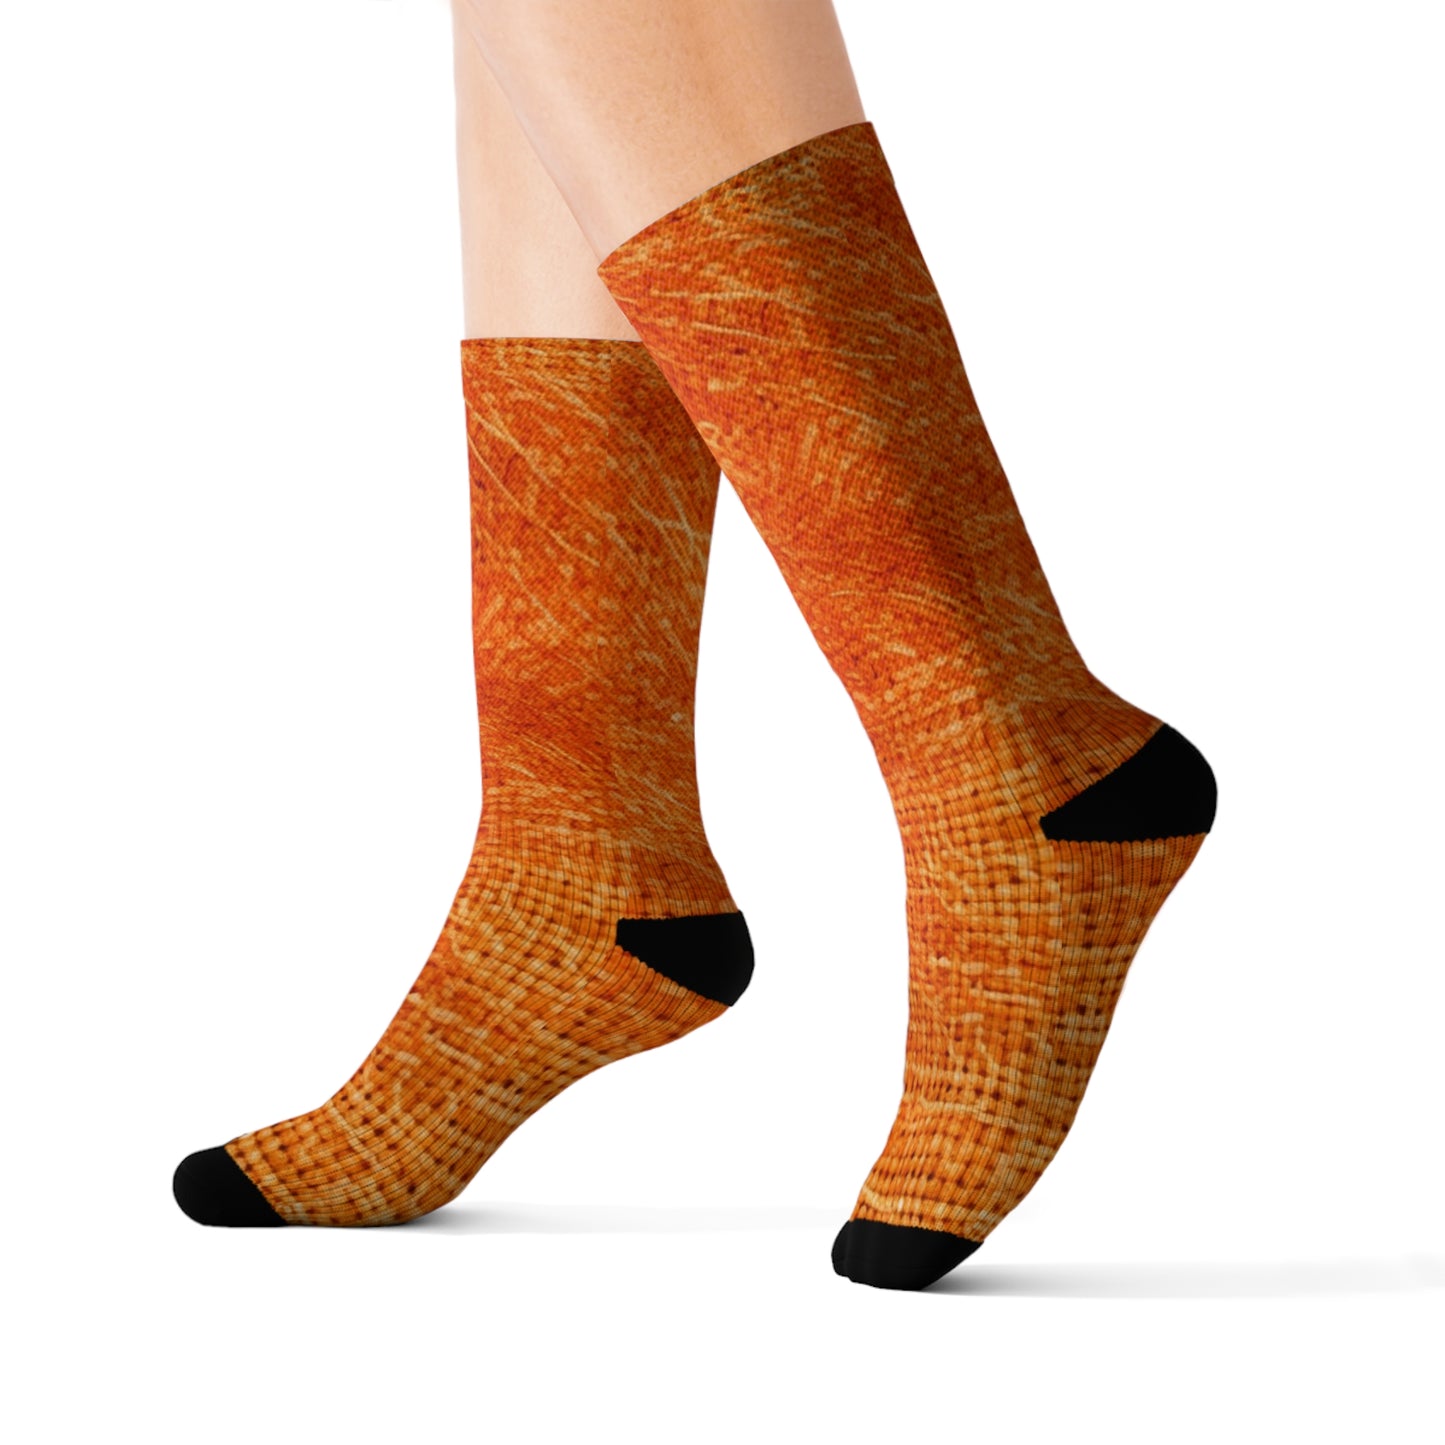 Burnt Orange/Rust: Denim-Inspired Autumn Fall Color Fabric - Sublimation Socks